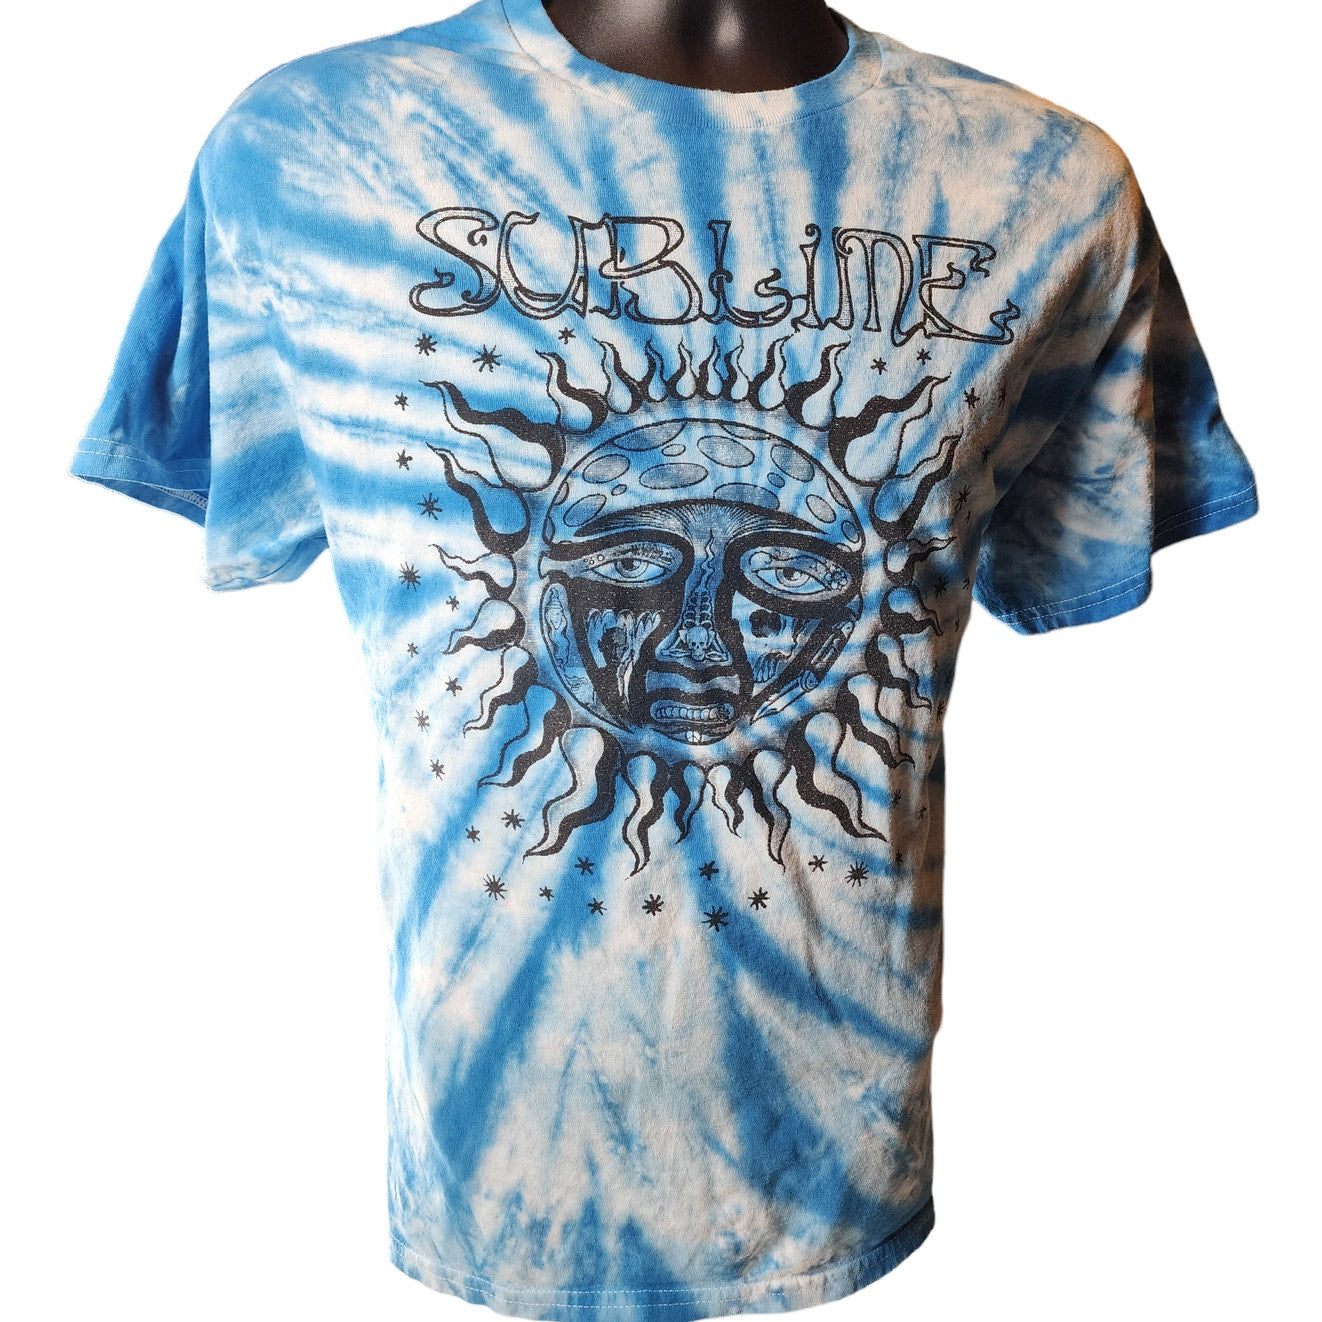 Sublime T Shirt Blue Tie Dye Sun Face Graphic Mens Large Vintage Rock Band Tee